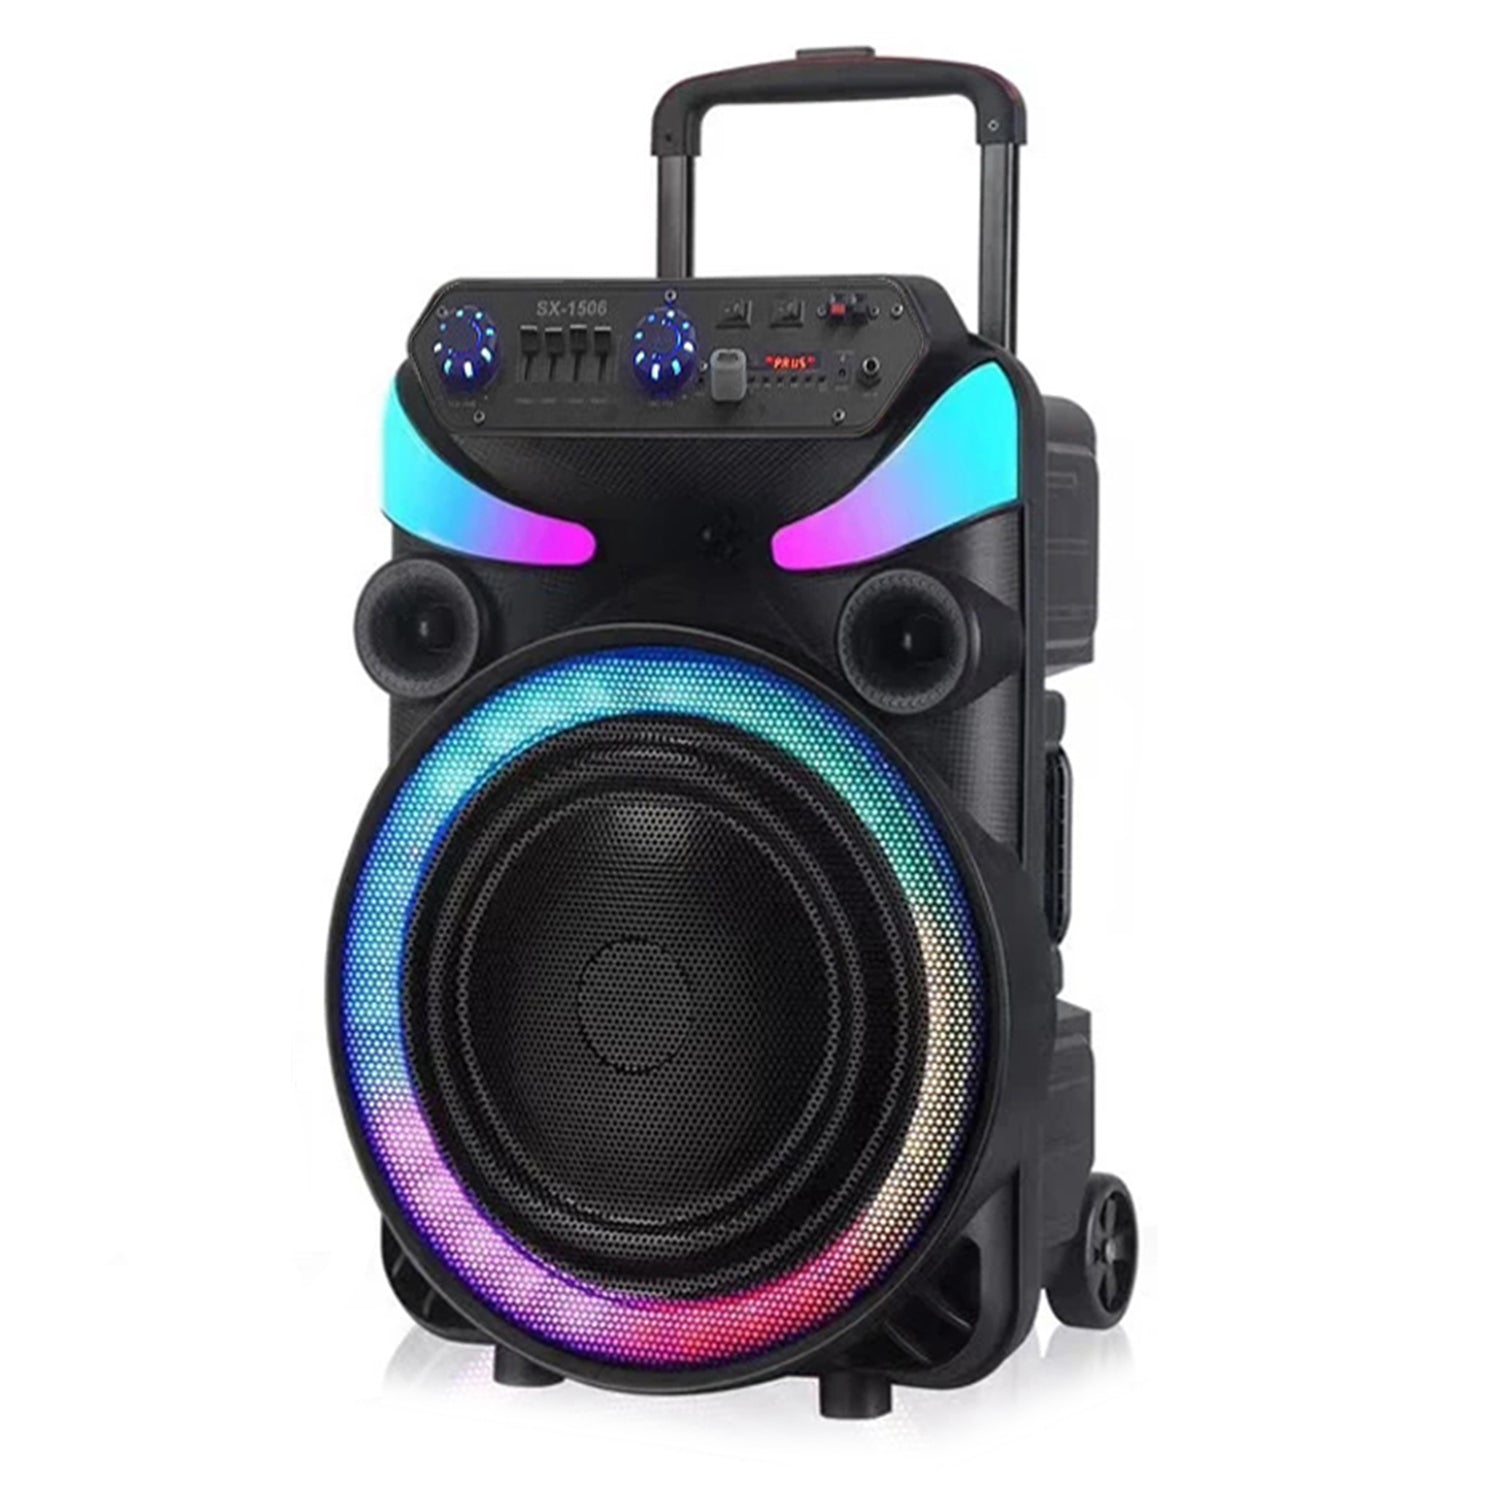 Part INC 15 Speaker Inch Outdoor ESHOPIMO Karaoke Bluetooth – Portable High-power 40W